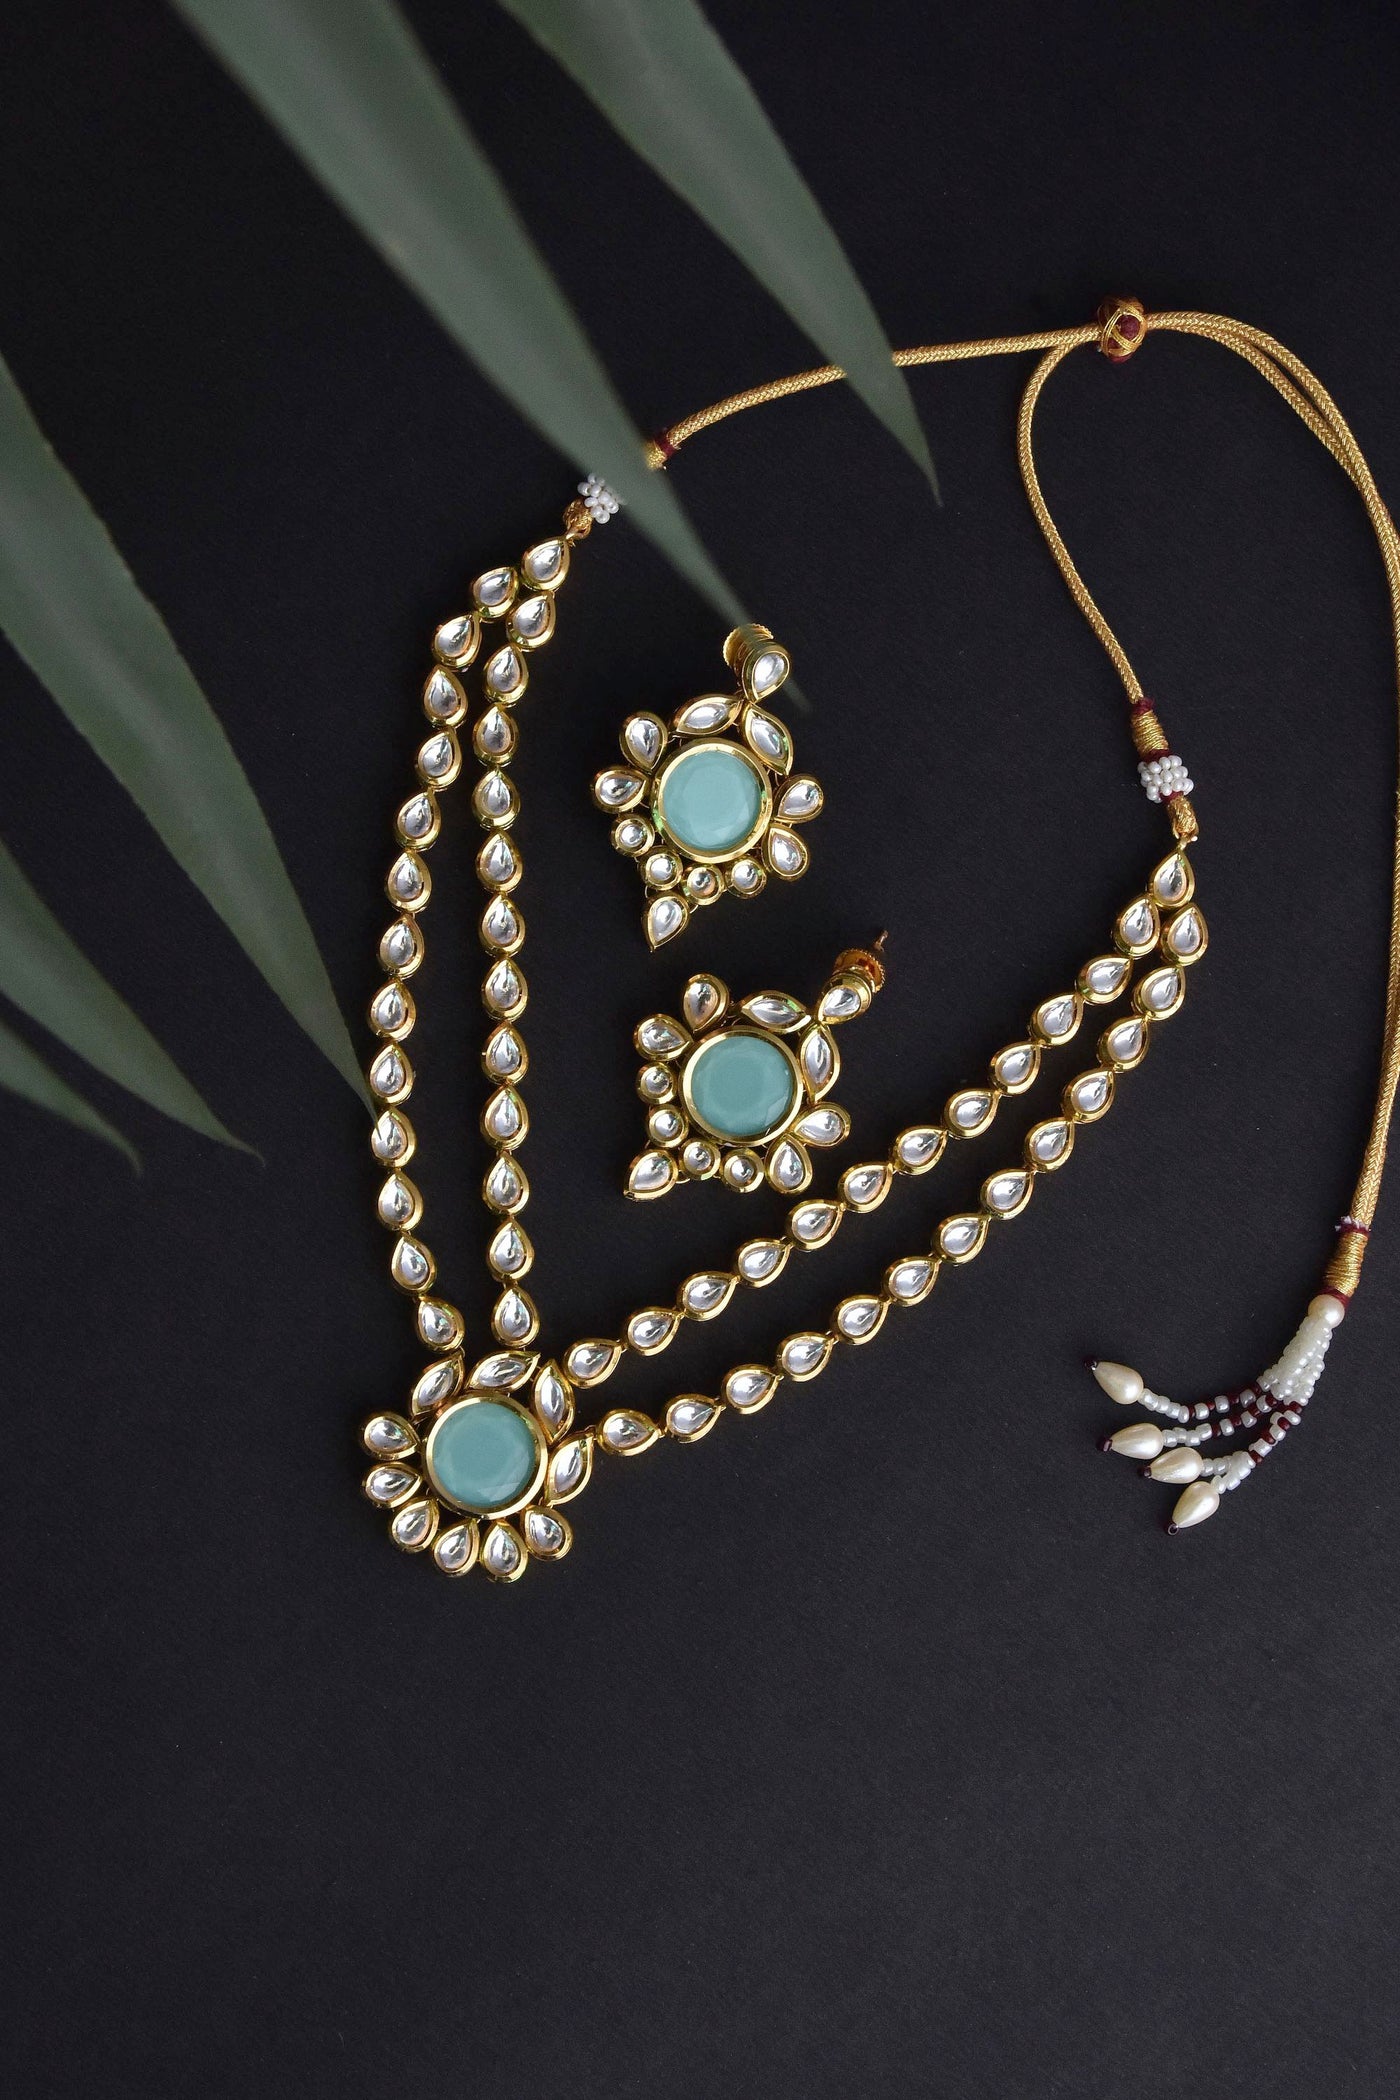 Noureen Mint Kundan Necklace Set